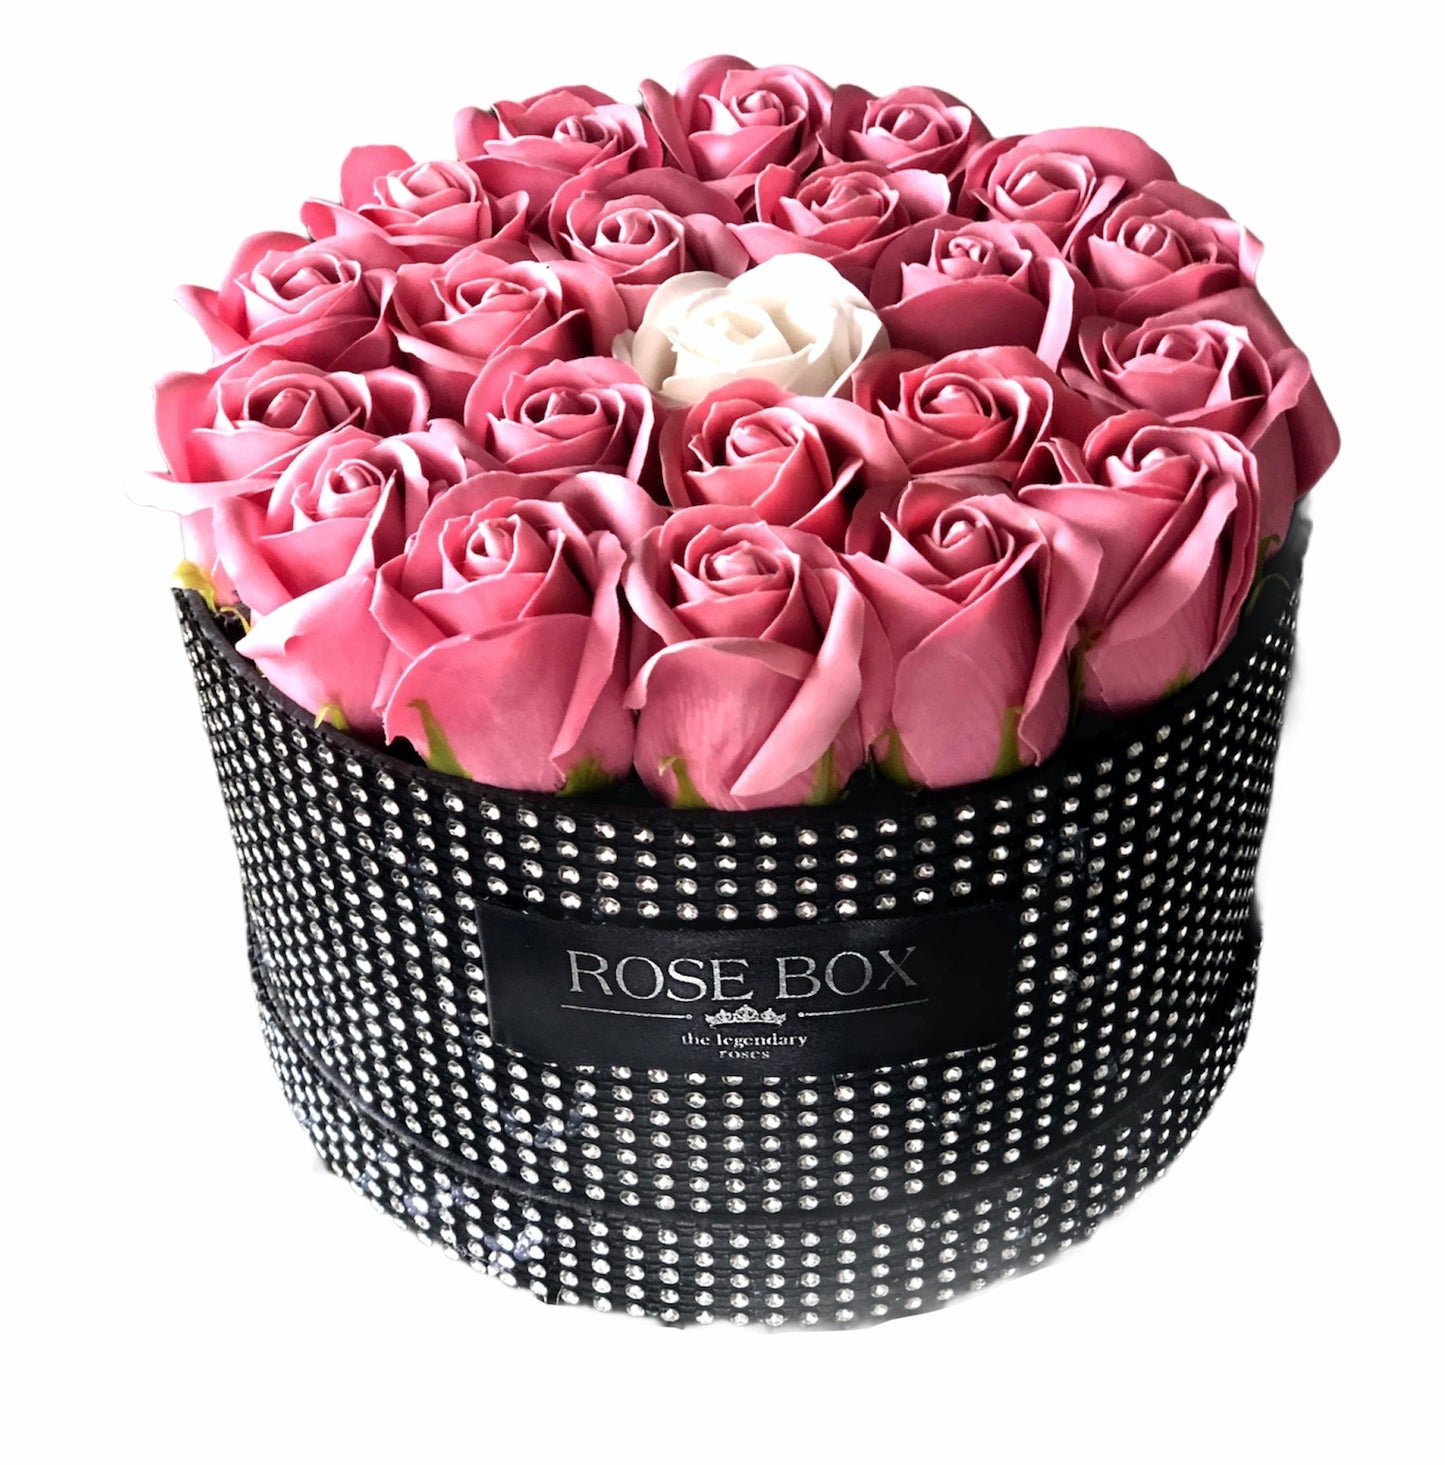 Cutie medie neagră cu cristale și trandafiri roz murdar